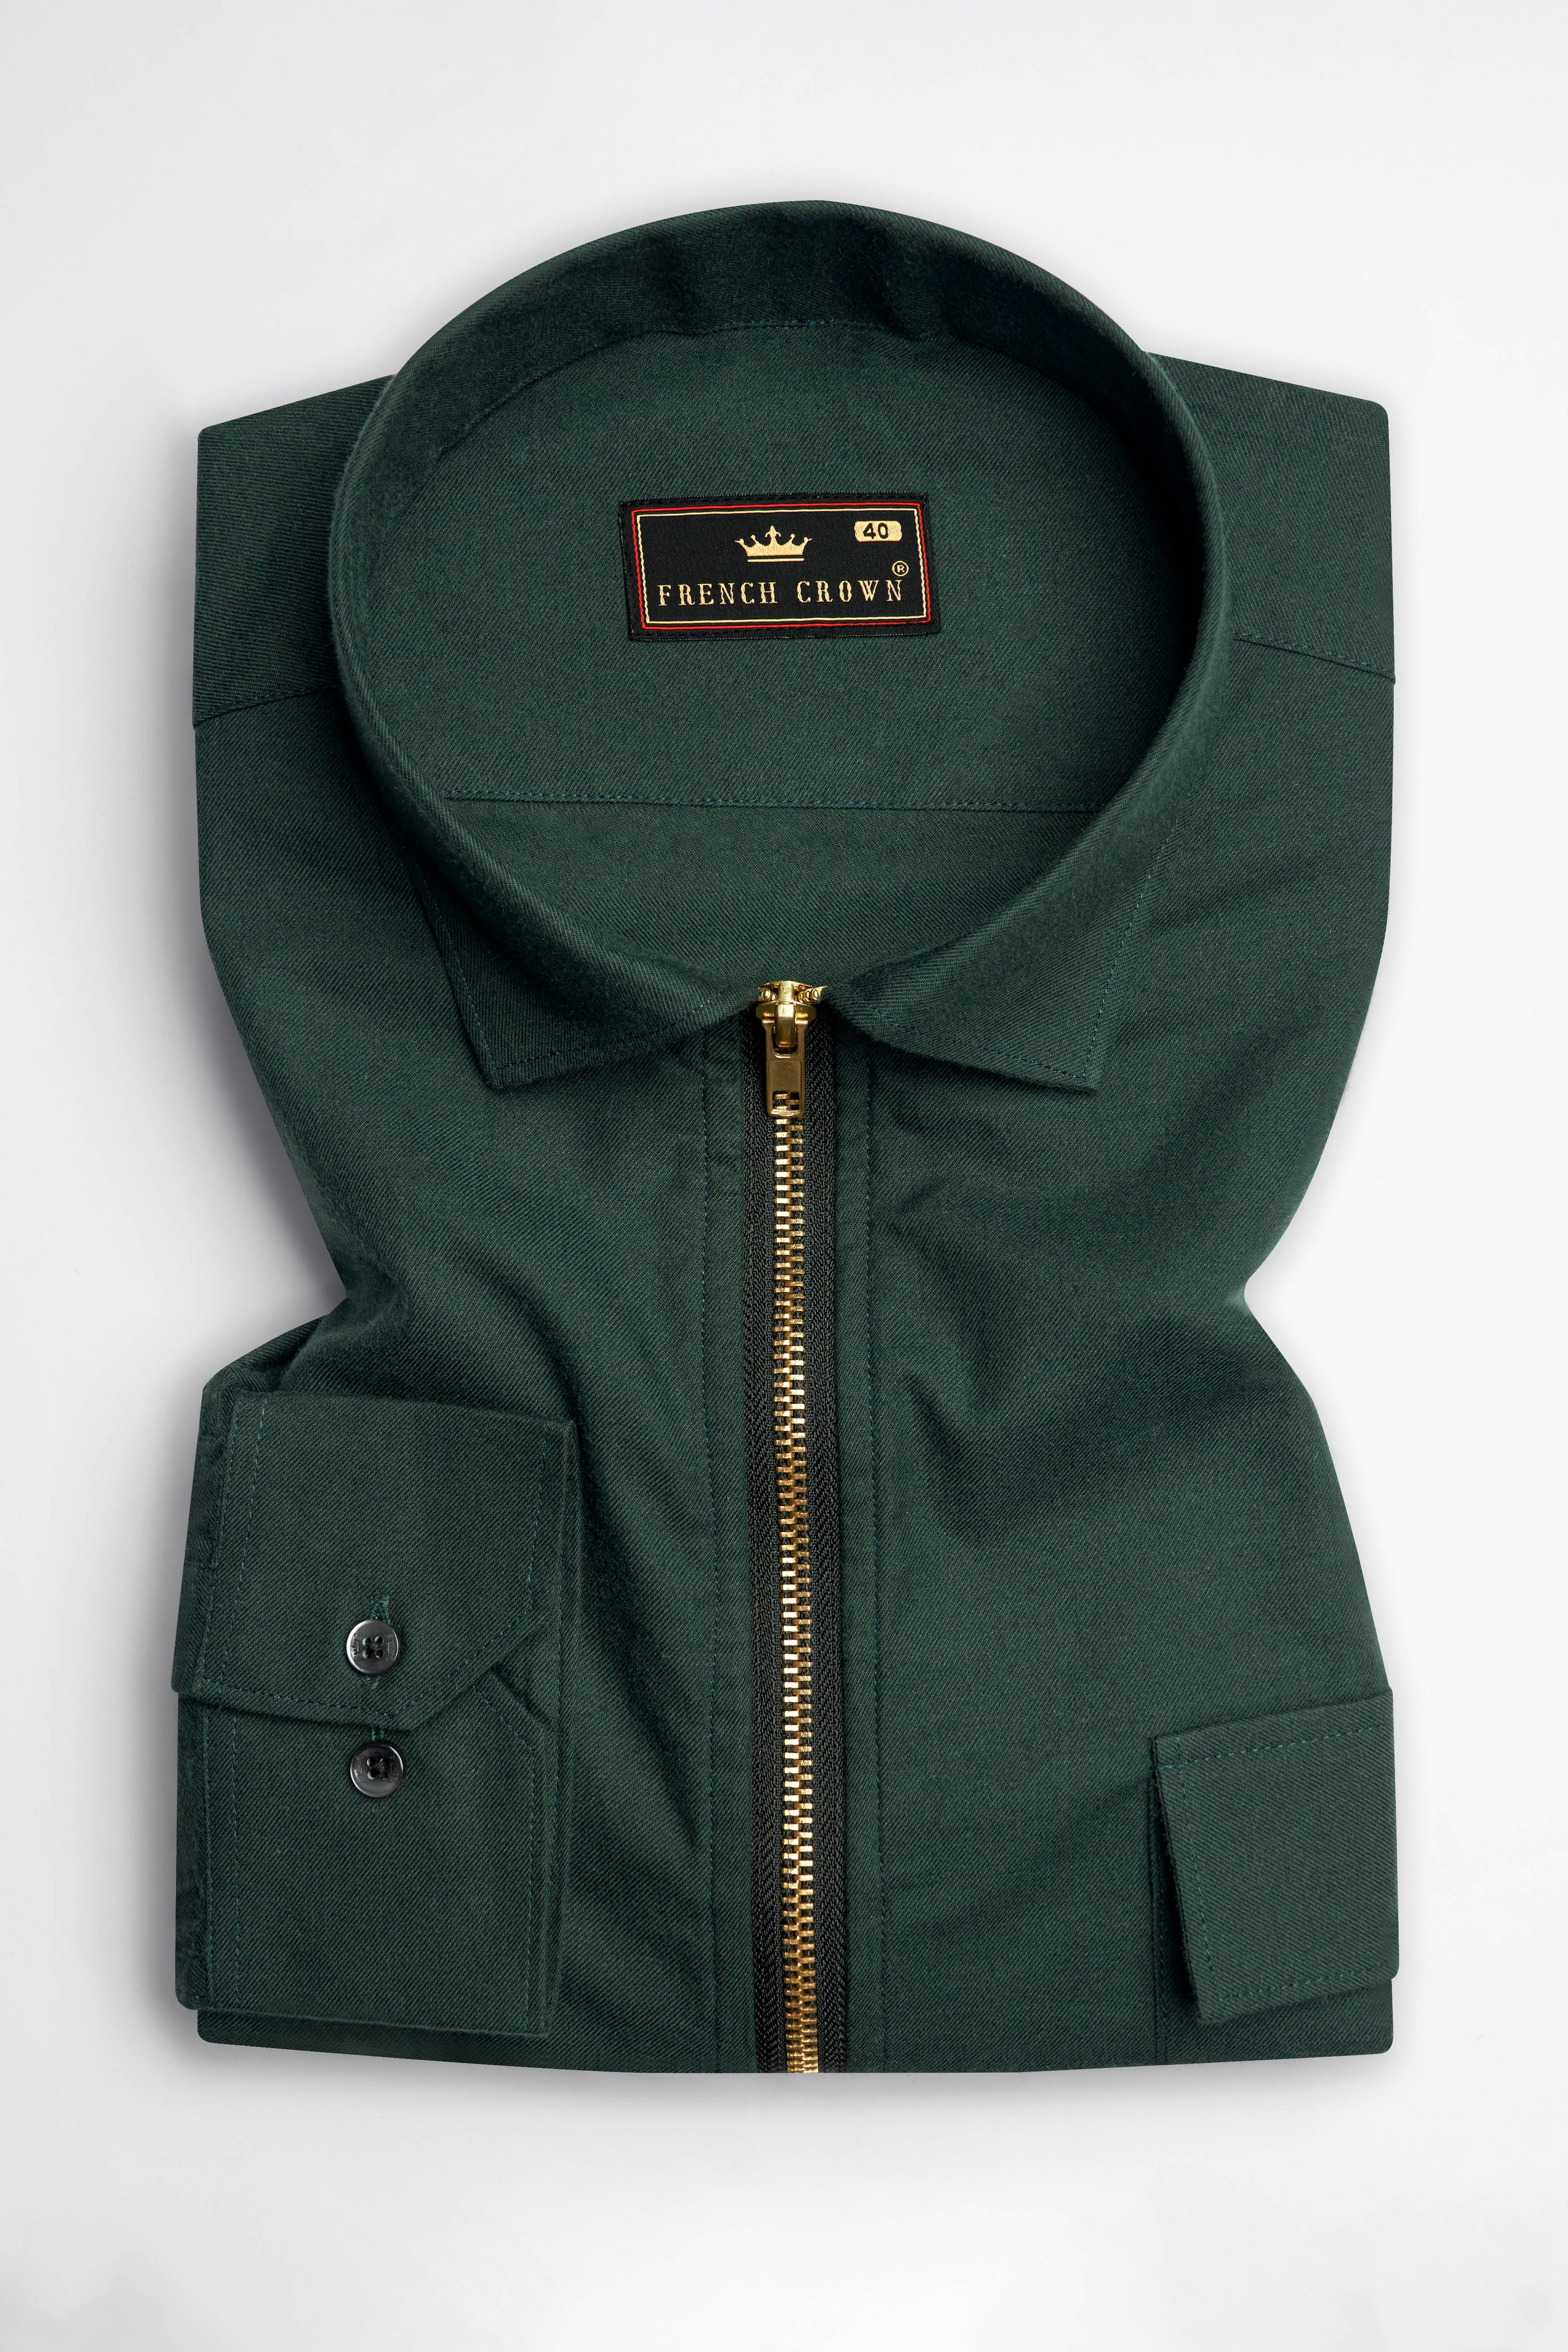 Gable Green Royal Oxford Shirt with Zipper Fastening